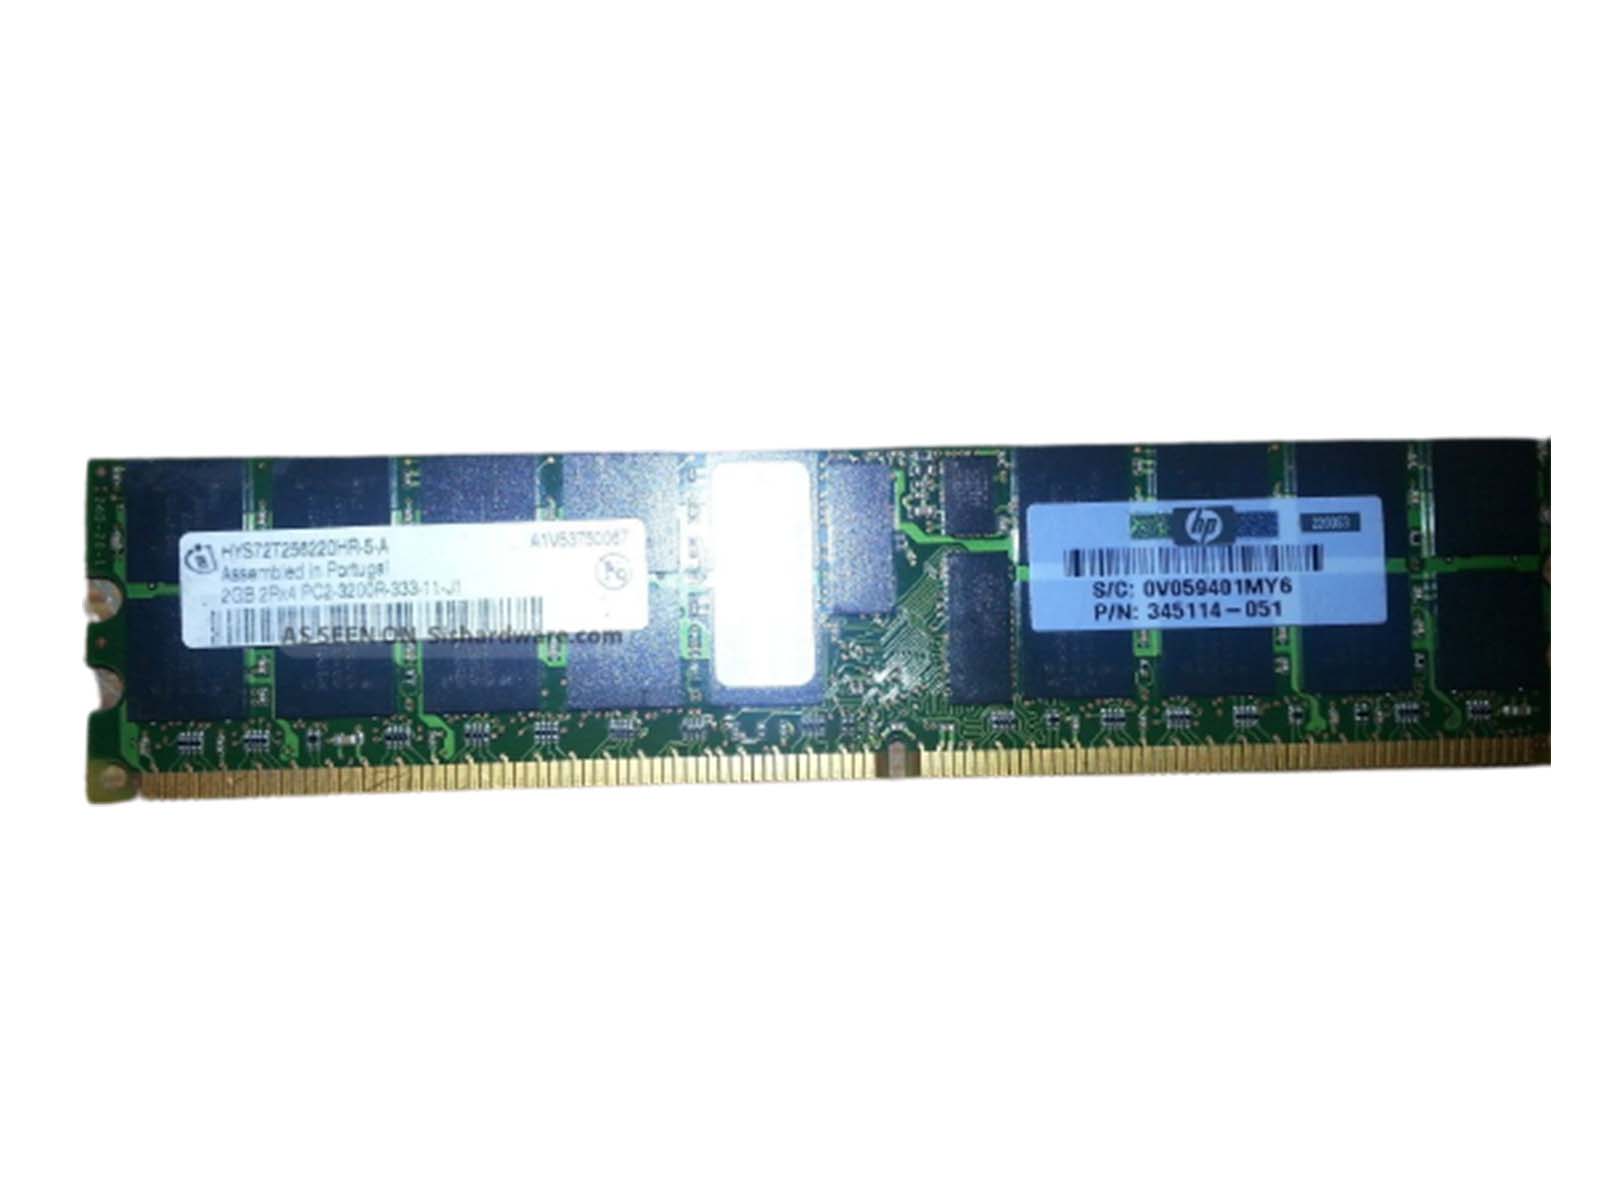 345114-051 | HP 2GB (1X2GB) 400MHz PC2-3200 CL3 ECC Registered DDR2 SDRAM DIMM Memory Module for ProLiant Server DL580 G3/ML570 G3